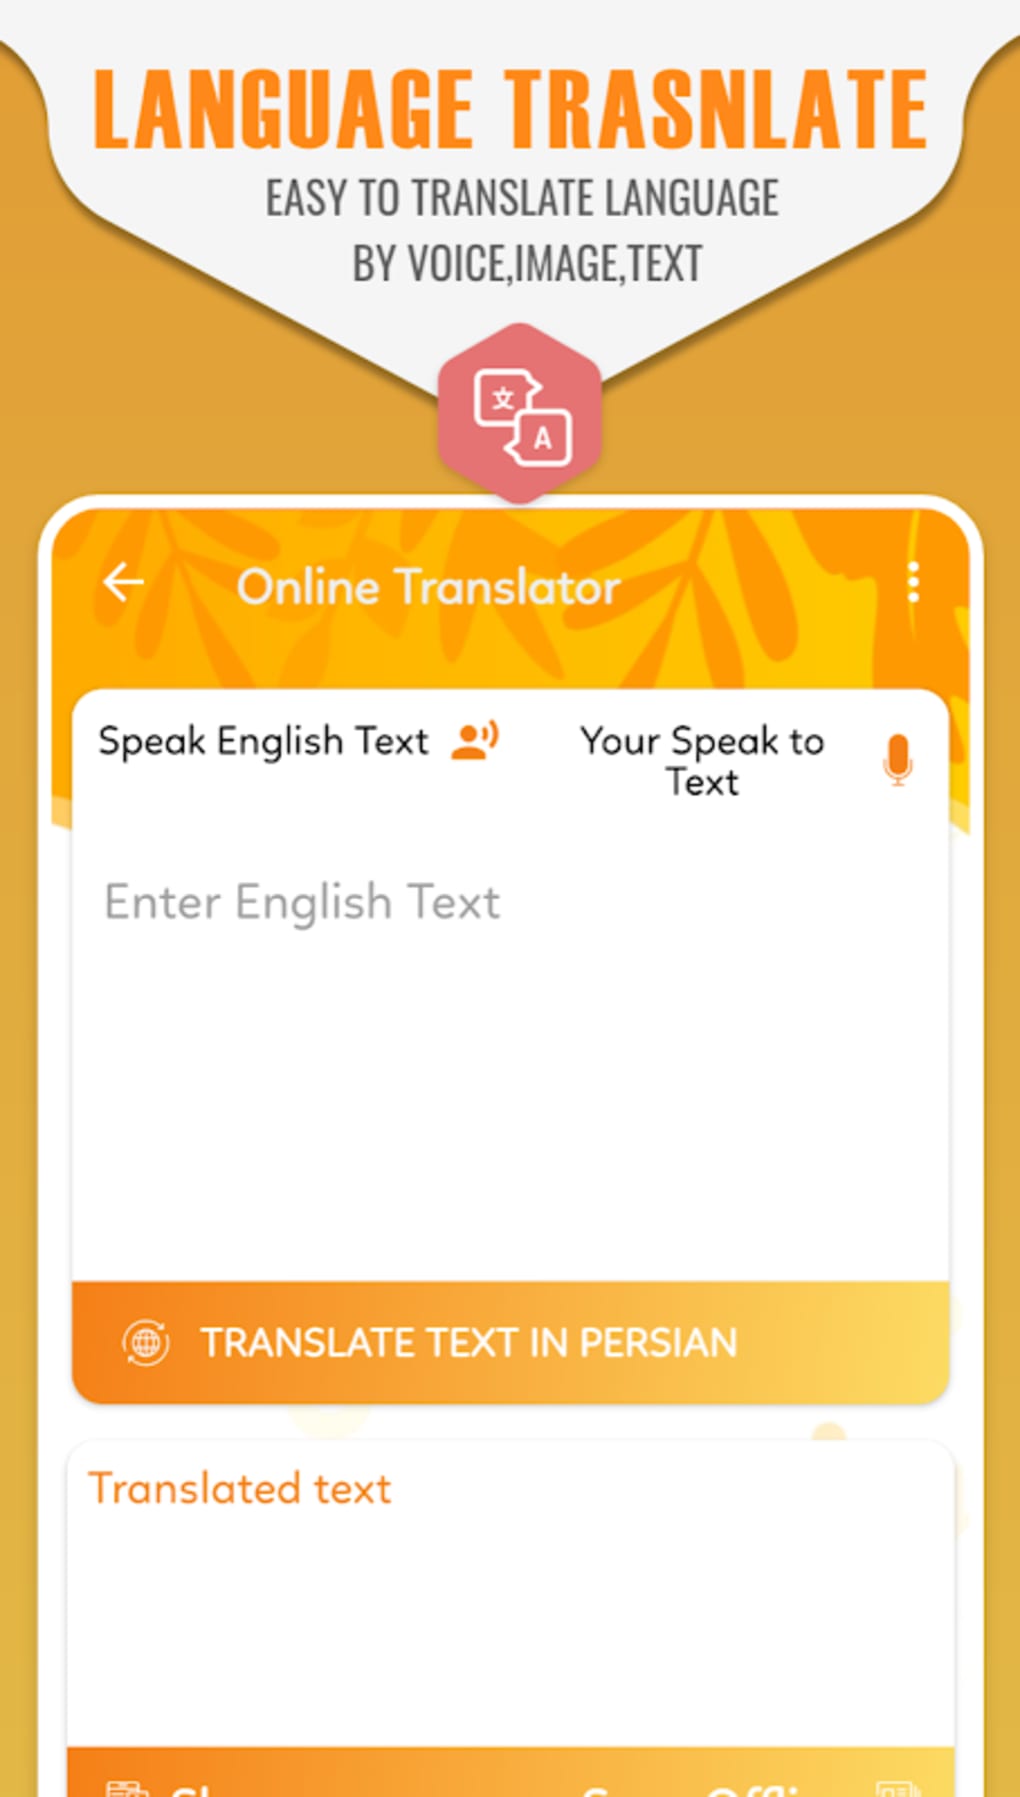 English Kannada Dictionary - Apps on Google Play